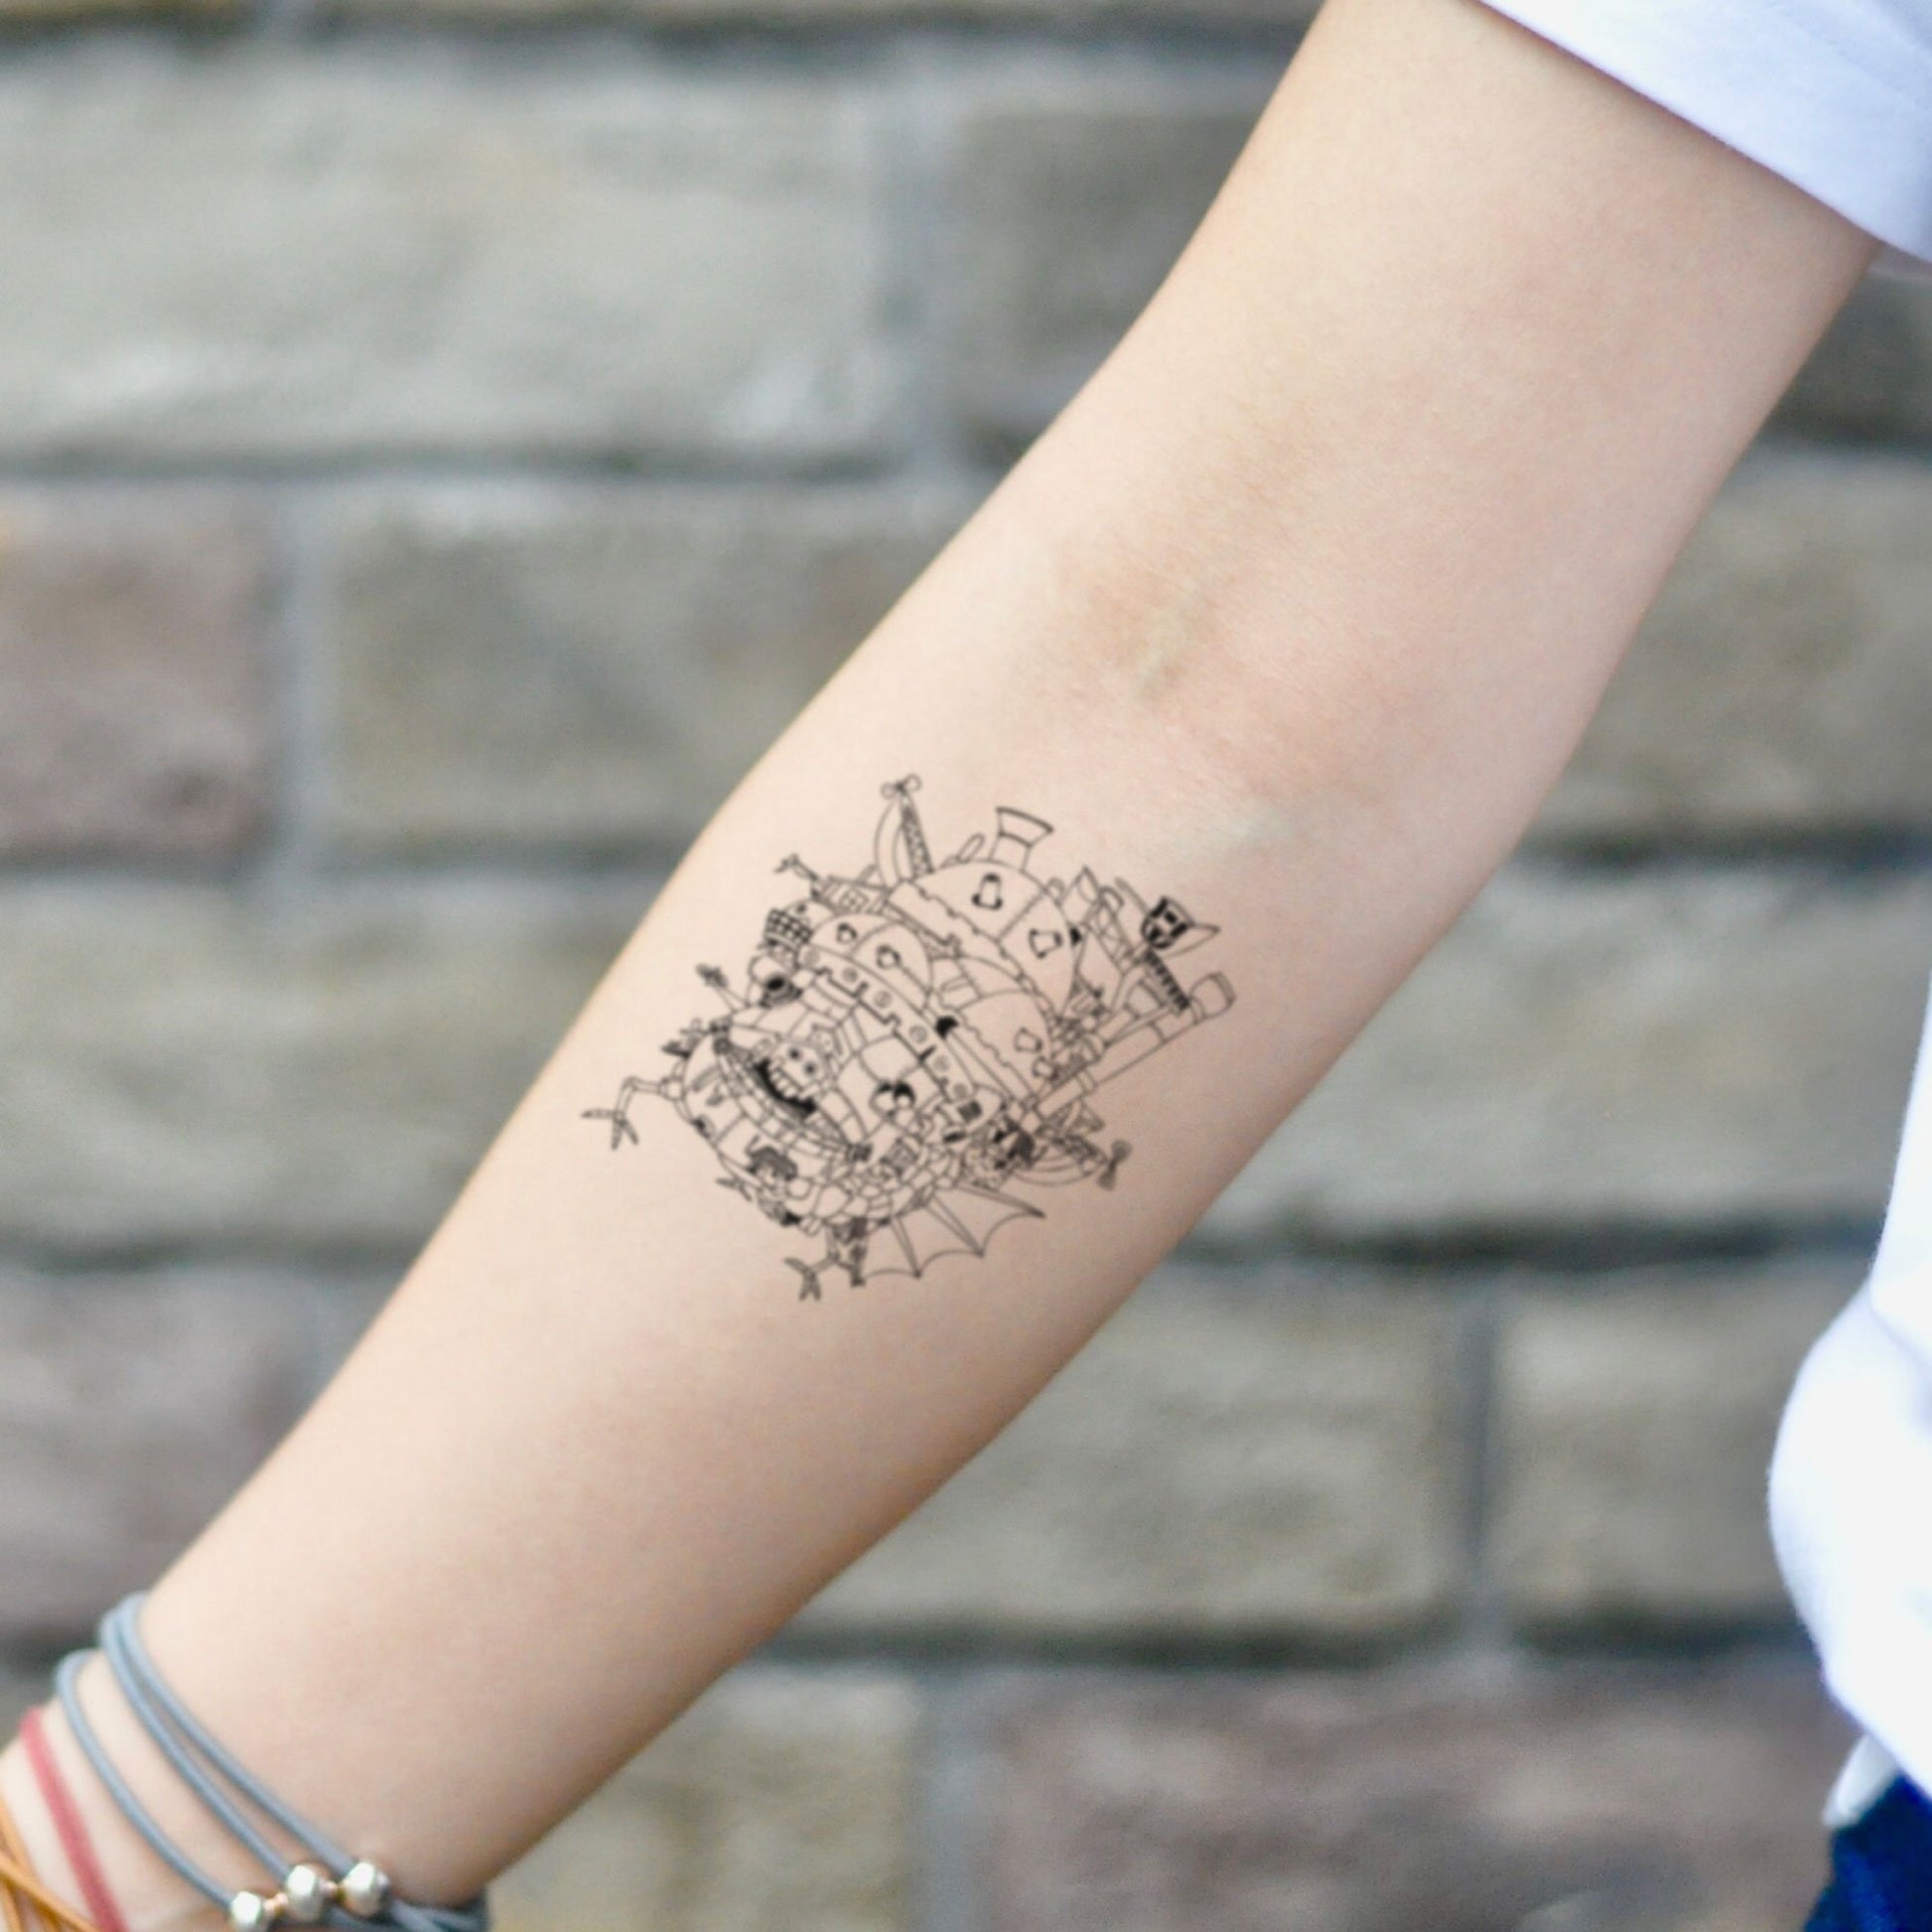 fake small howl's moving castle illustrative temporary tattoo sticker design idea on inner arm